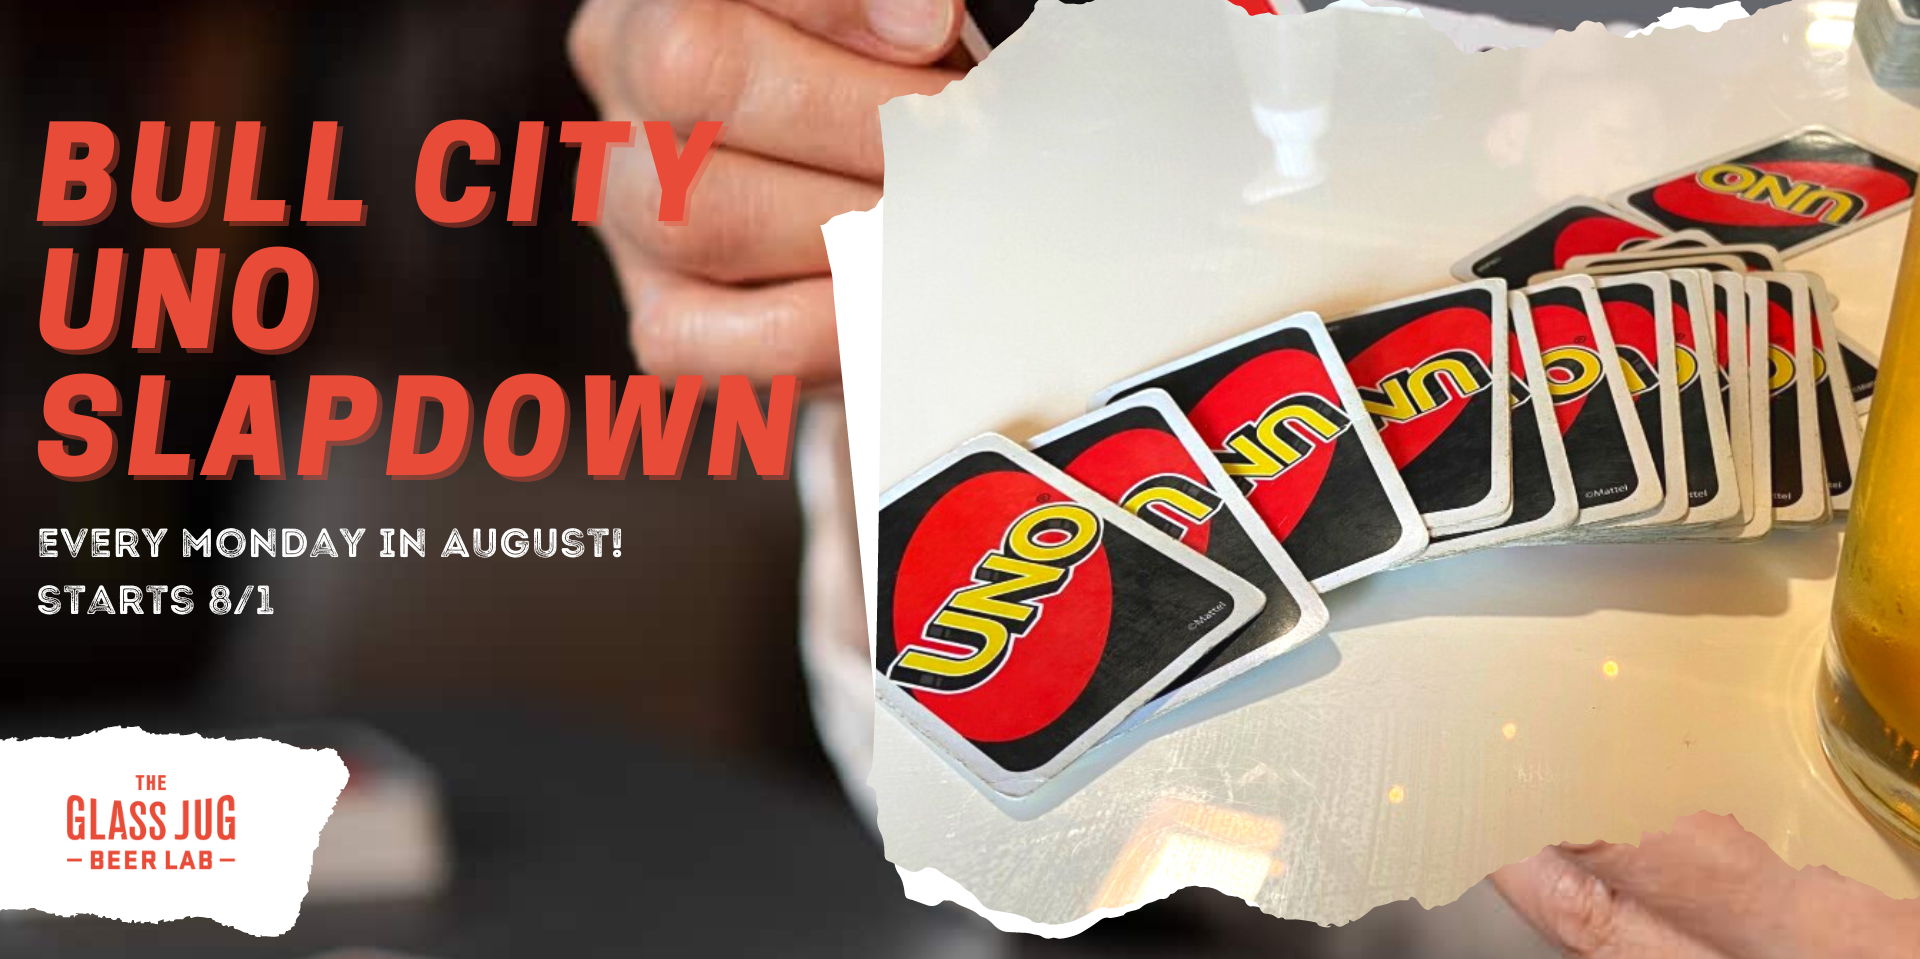 Bull City Uno Slapdown promotional image